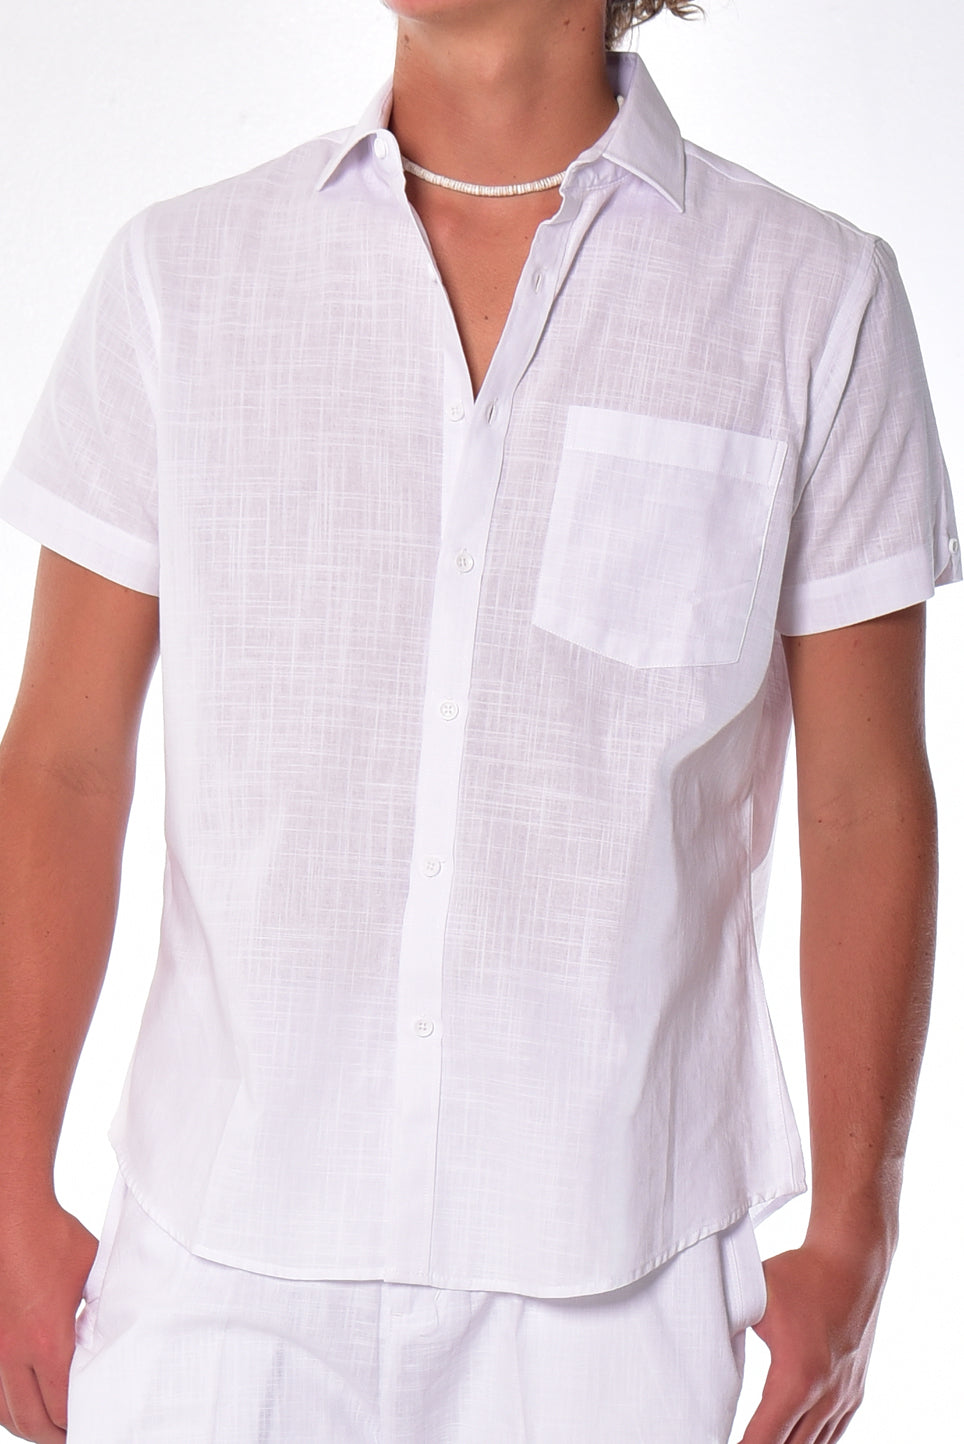 Bohio Men Cotton Gauze Shirt - Long Sleeve - MCS01